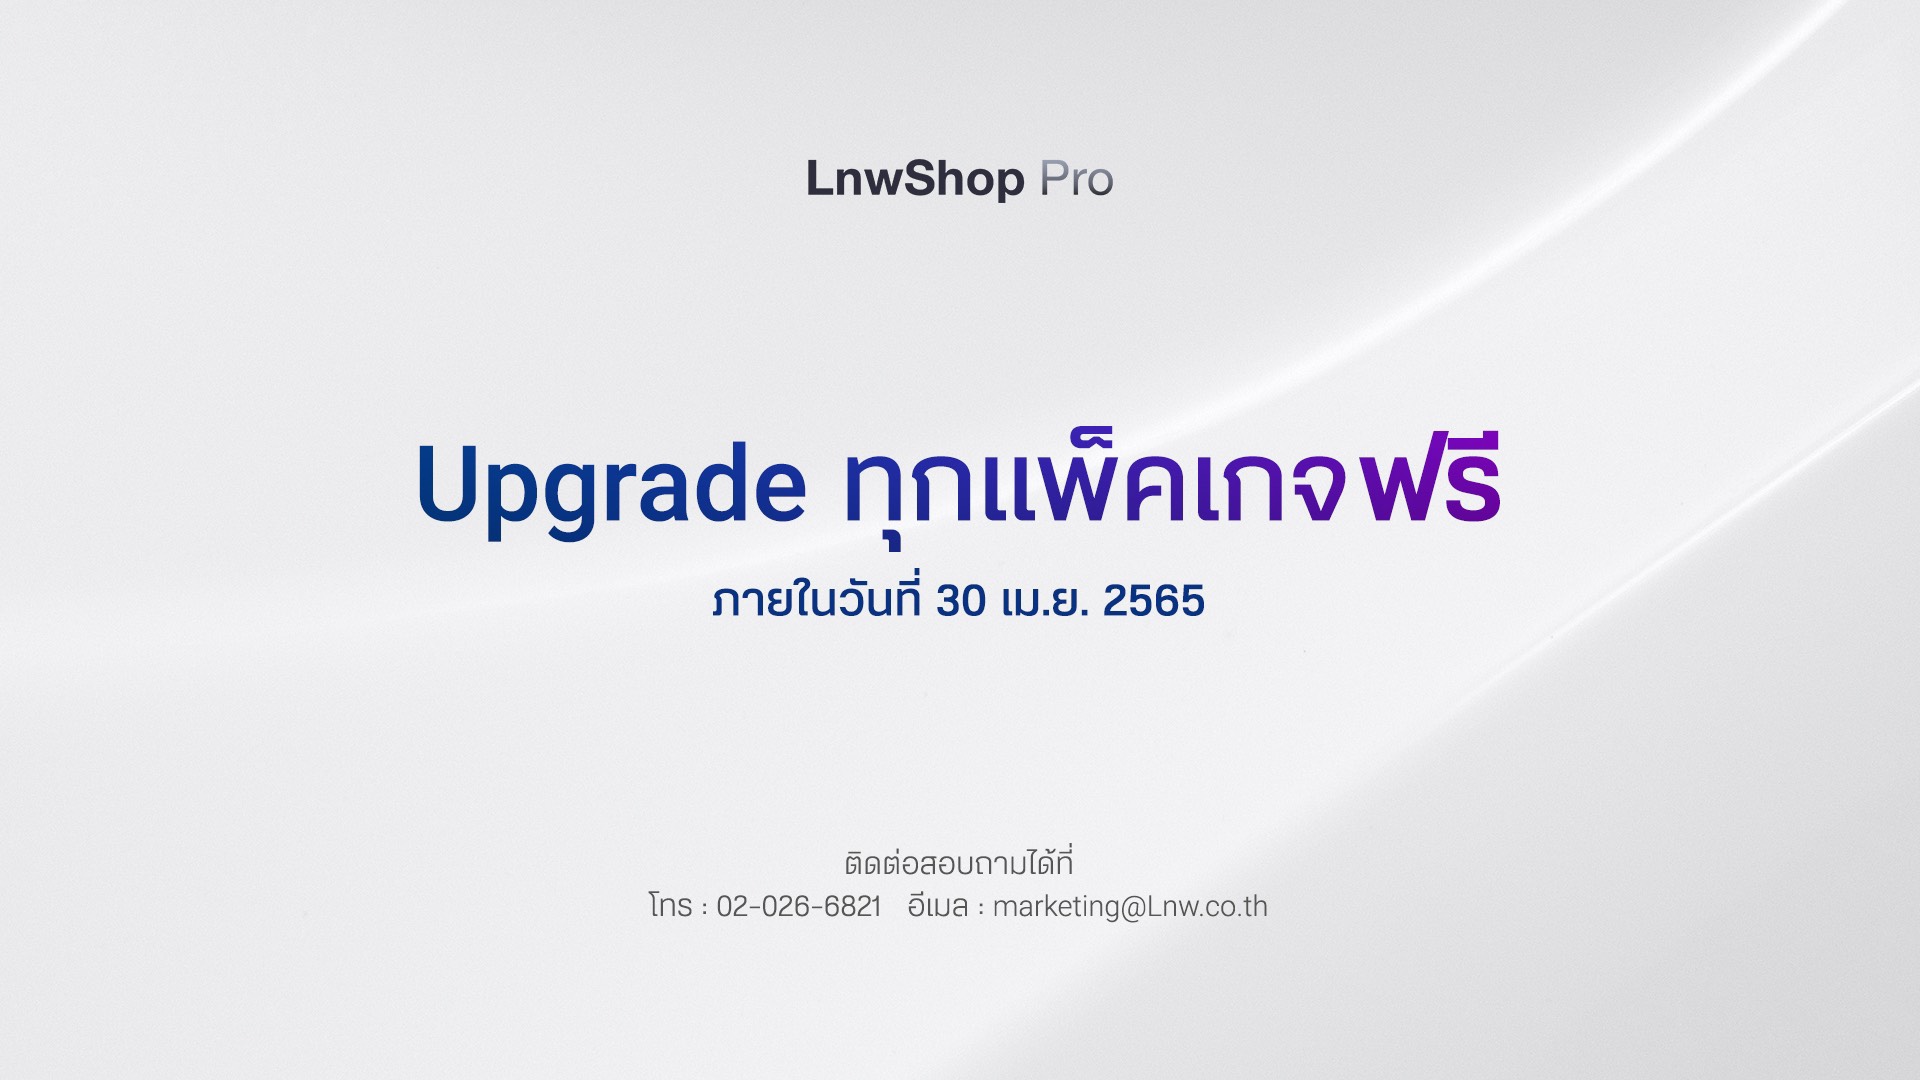 LnwShop Pro Grand Opening Promotion